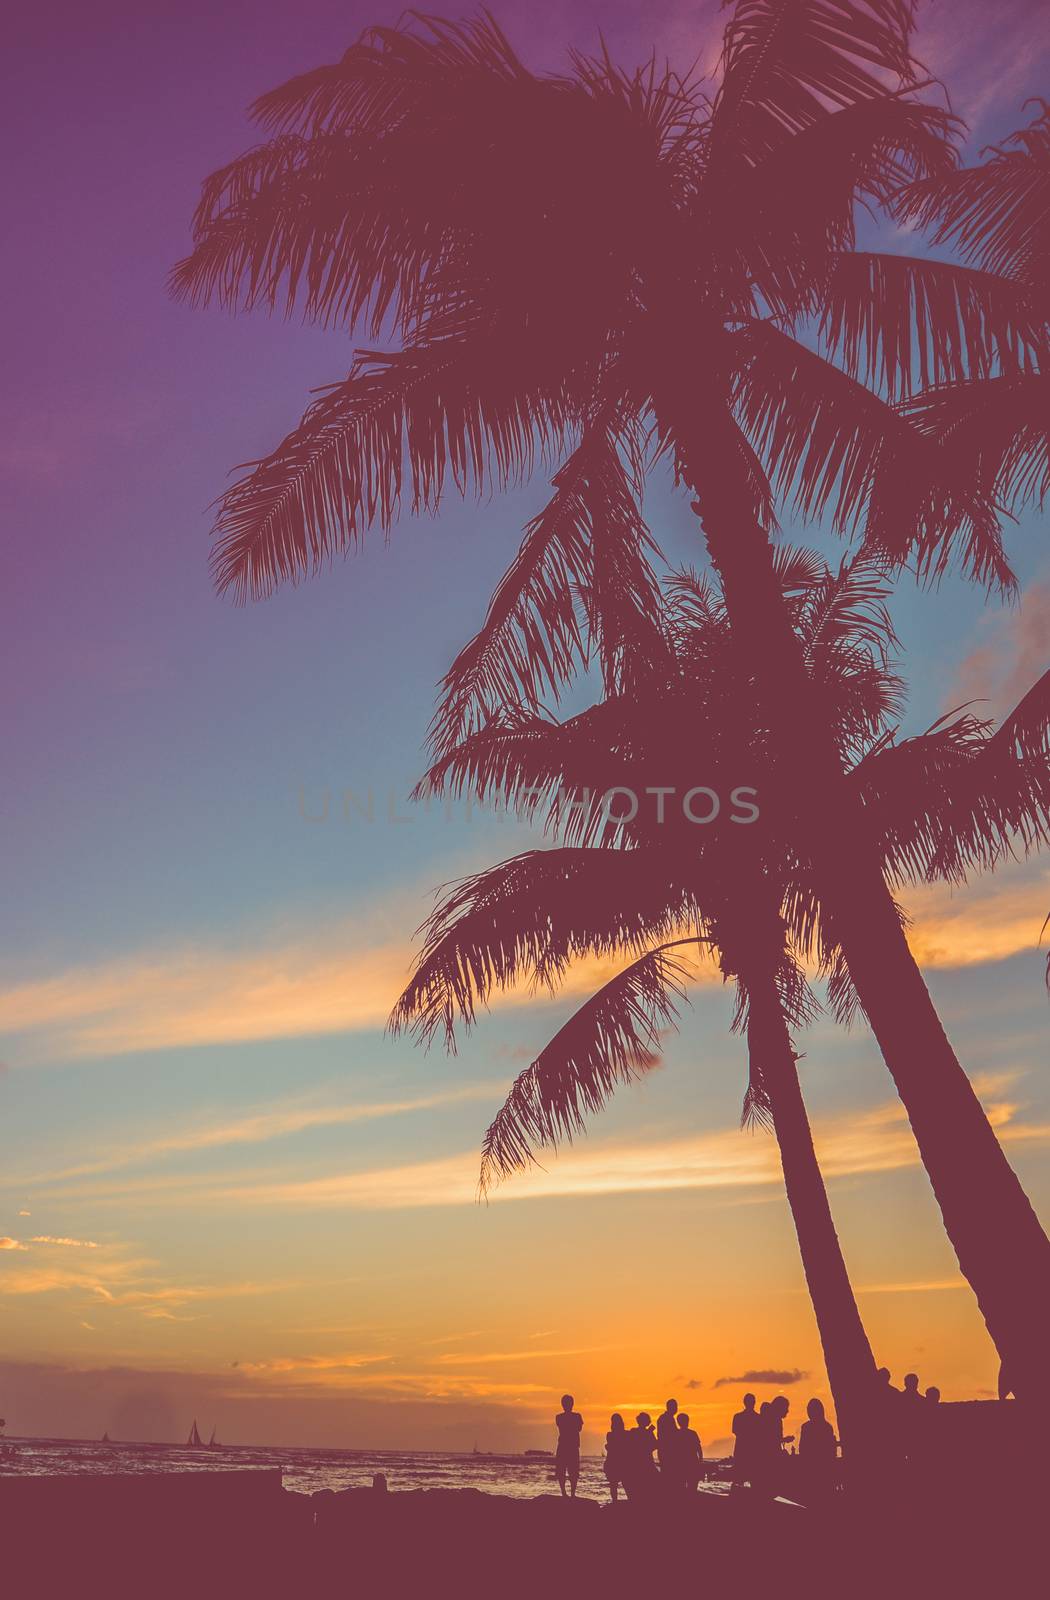 Retro Beach Party Under Palm Trees by mrdoomits